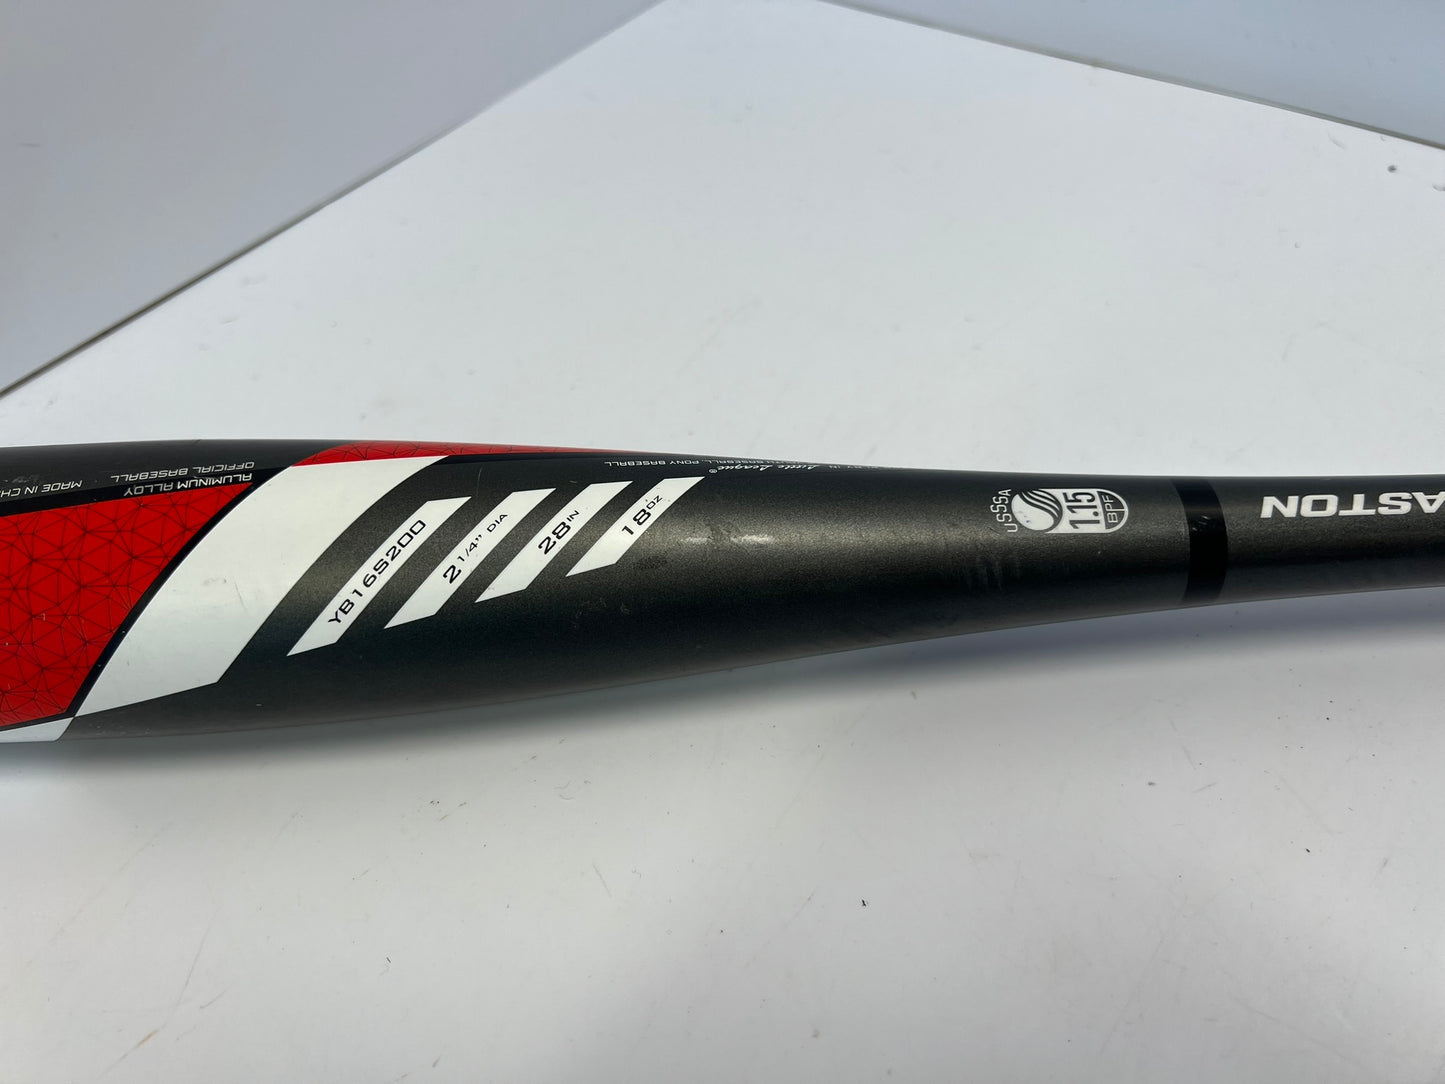 Baseball Bat 28 inch 18 oz Easton S200 Grey Red